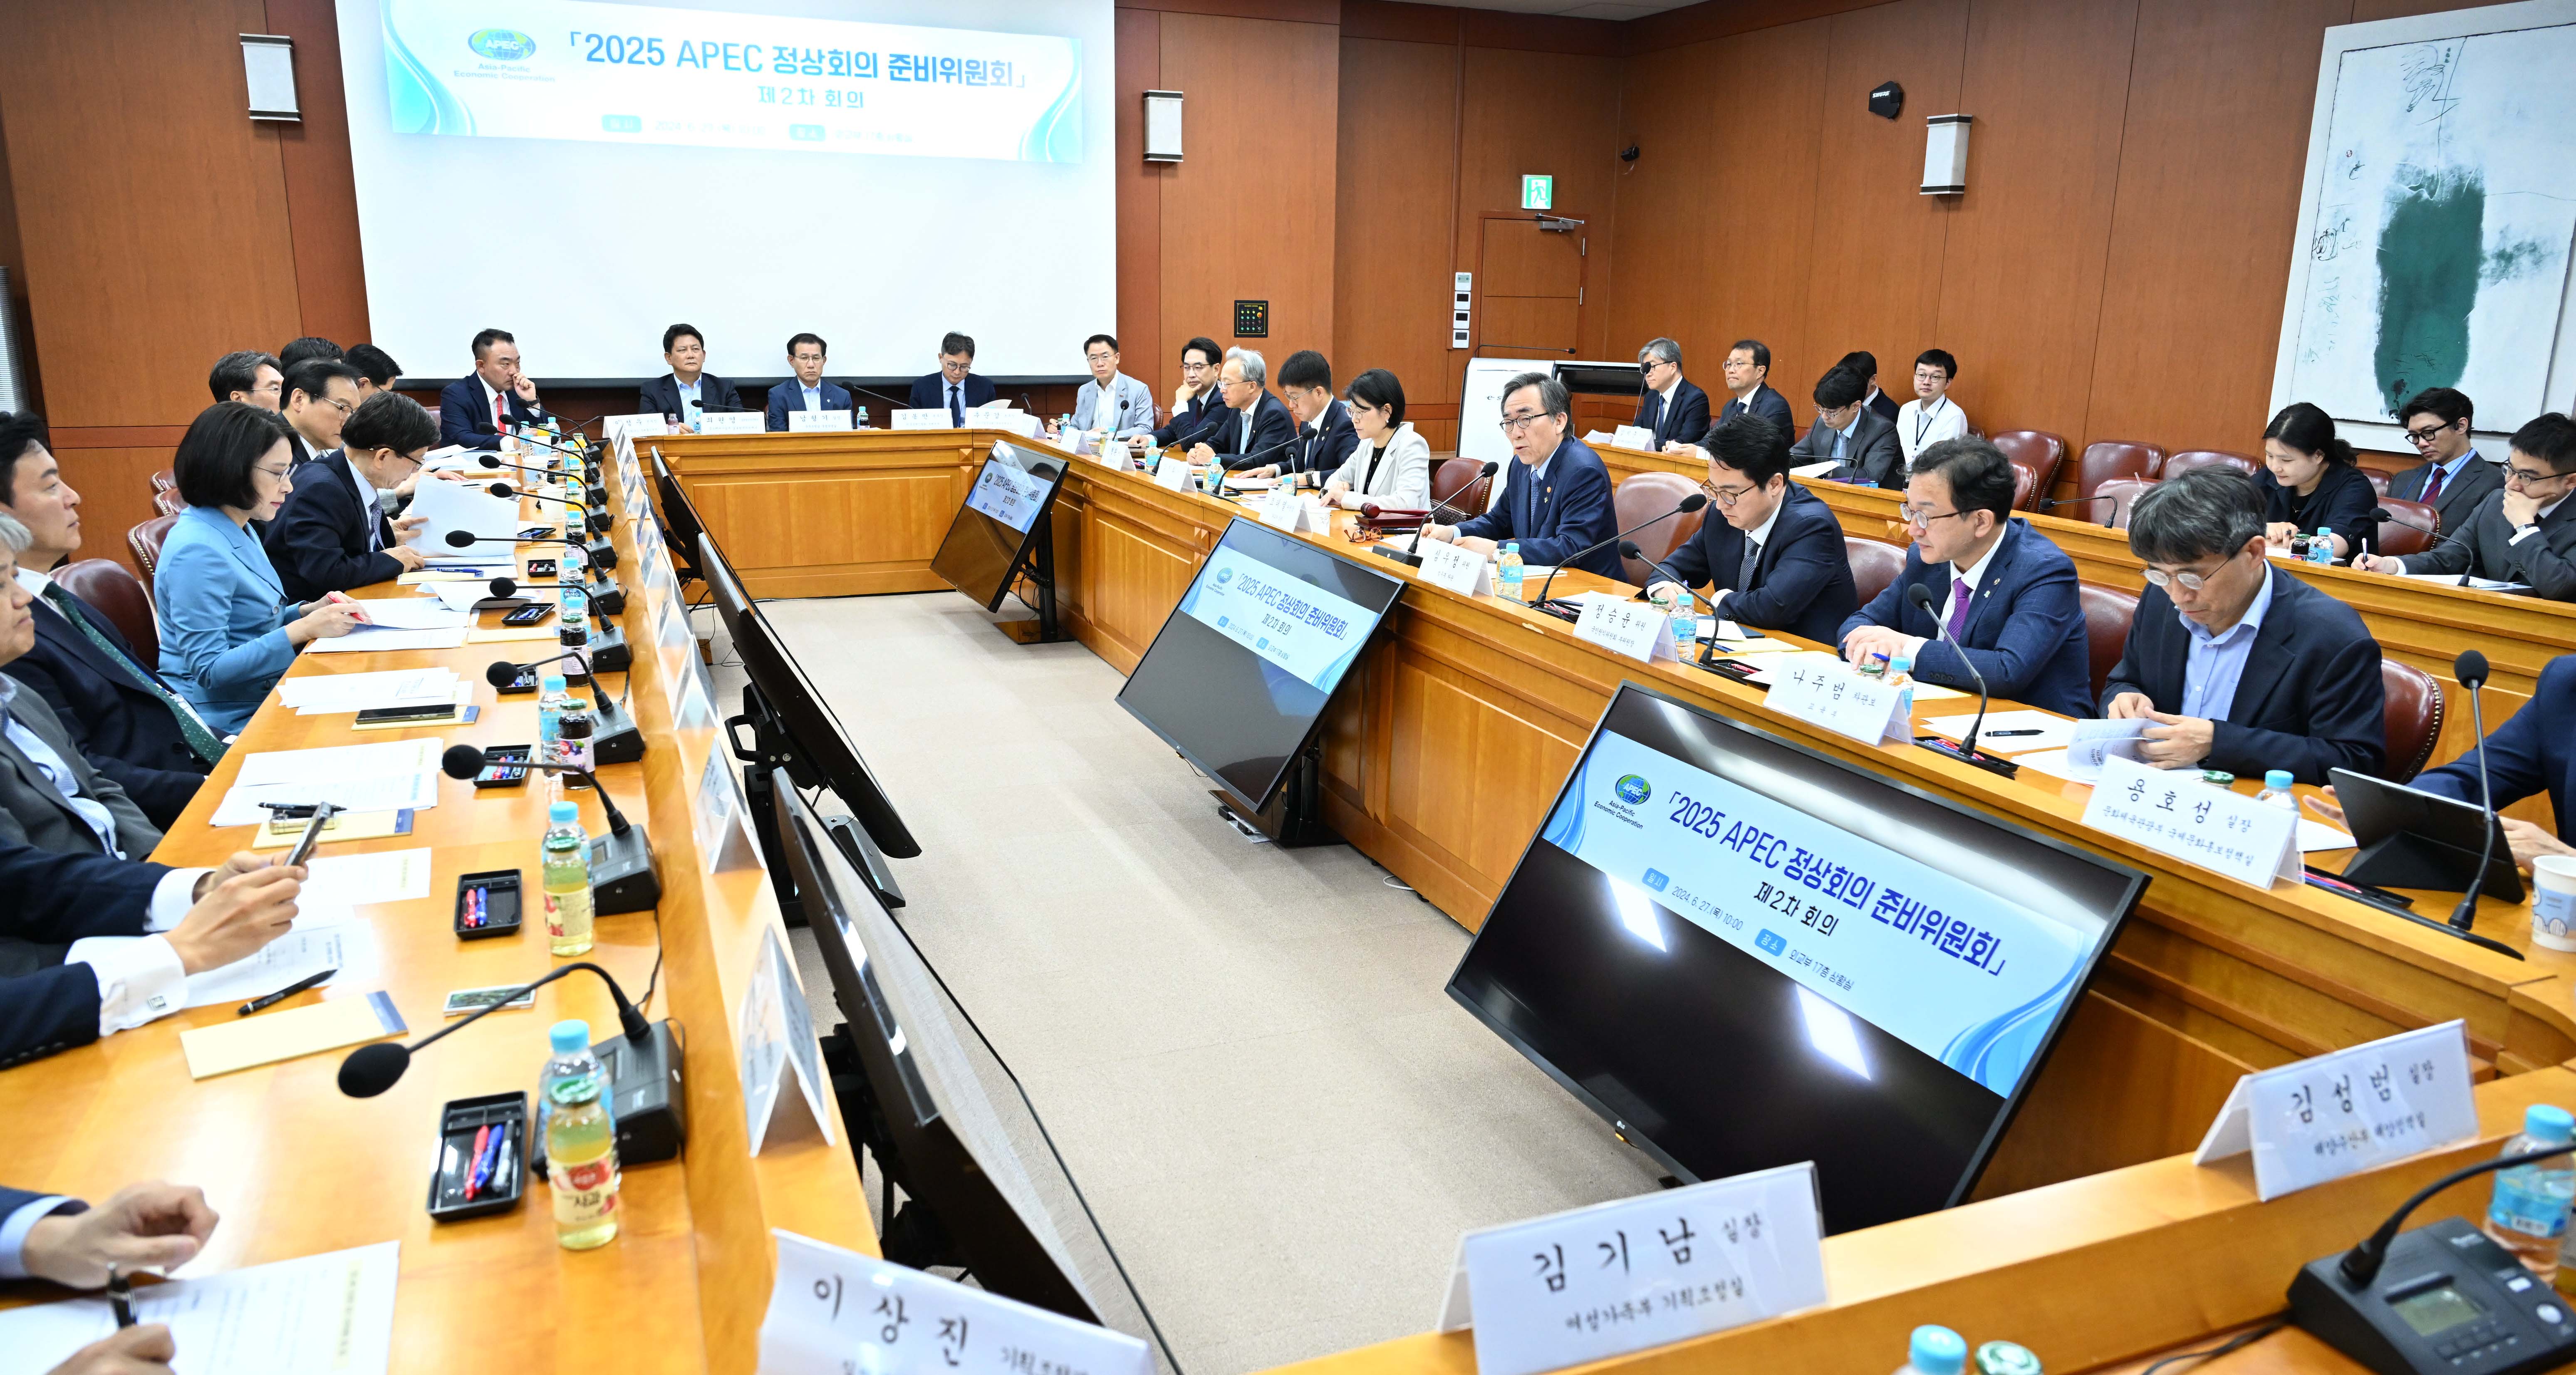 2nd Meeting of Korea APEC 2025 Organizing Committee